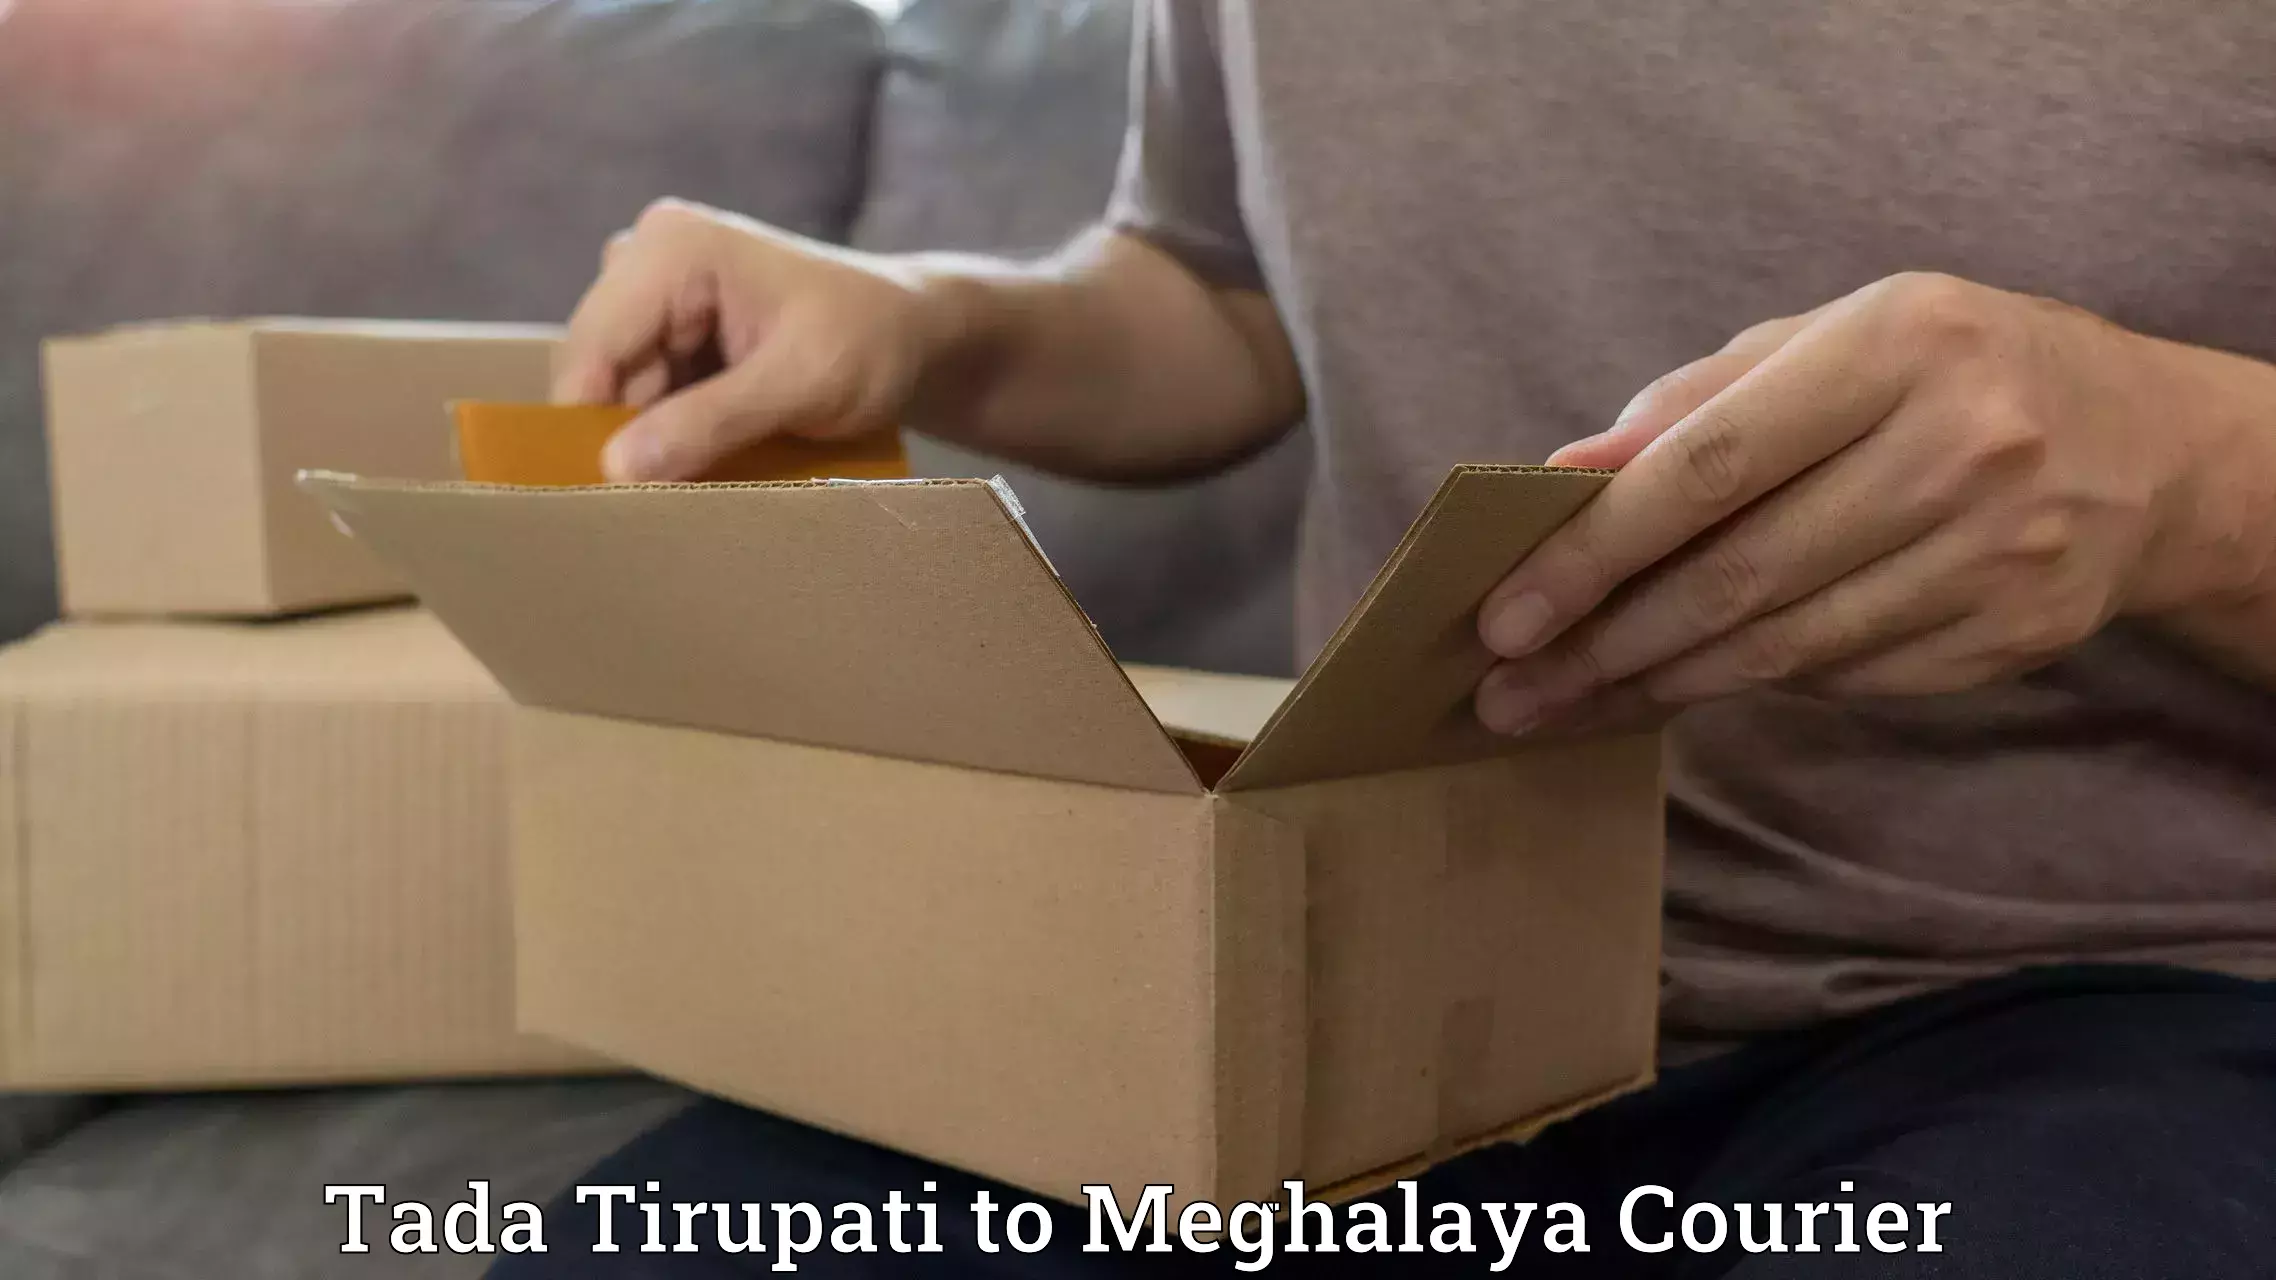 Reliable delivery network Tada Tirupati to Shillong